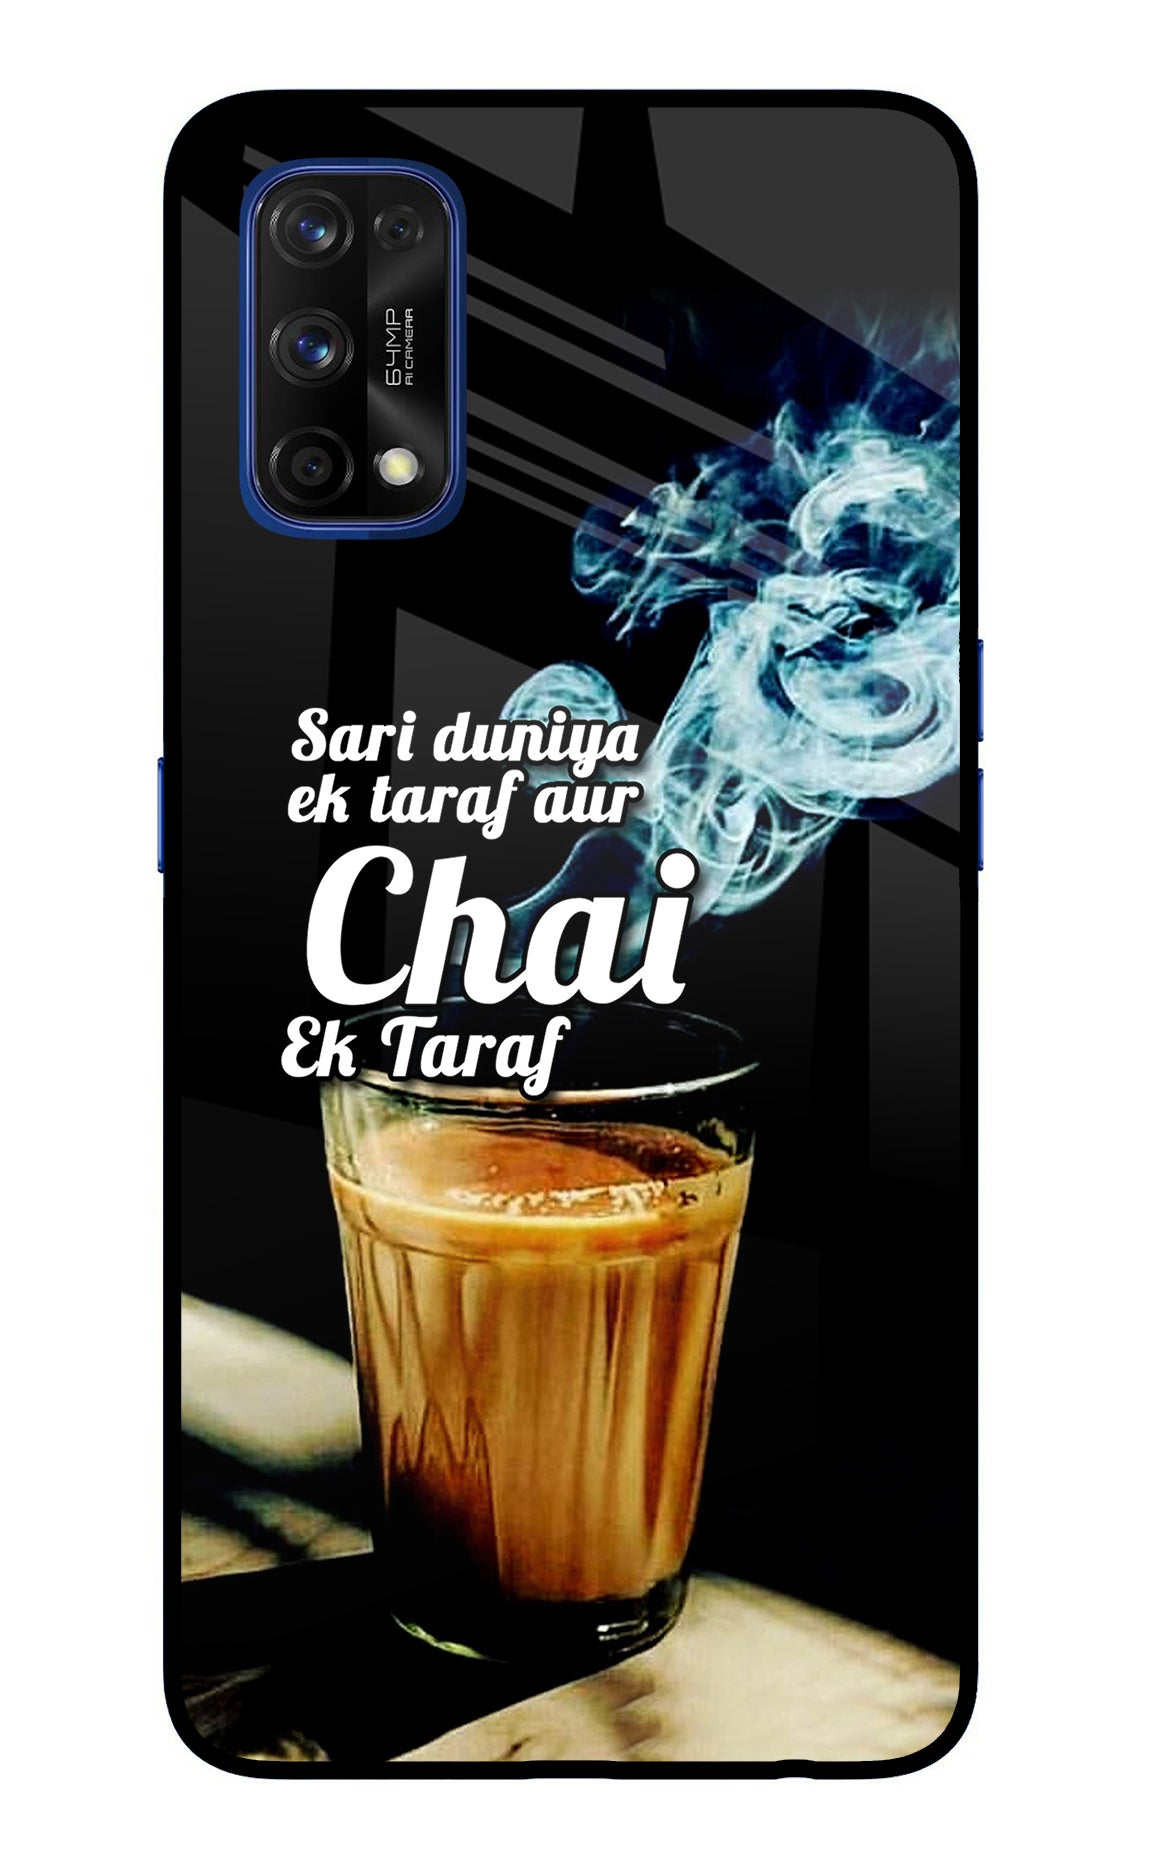 Chai Ek Taraf Quote Realme 7 Pro Glass Case